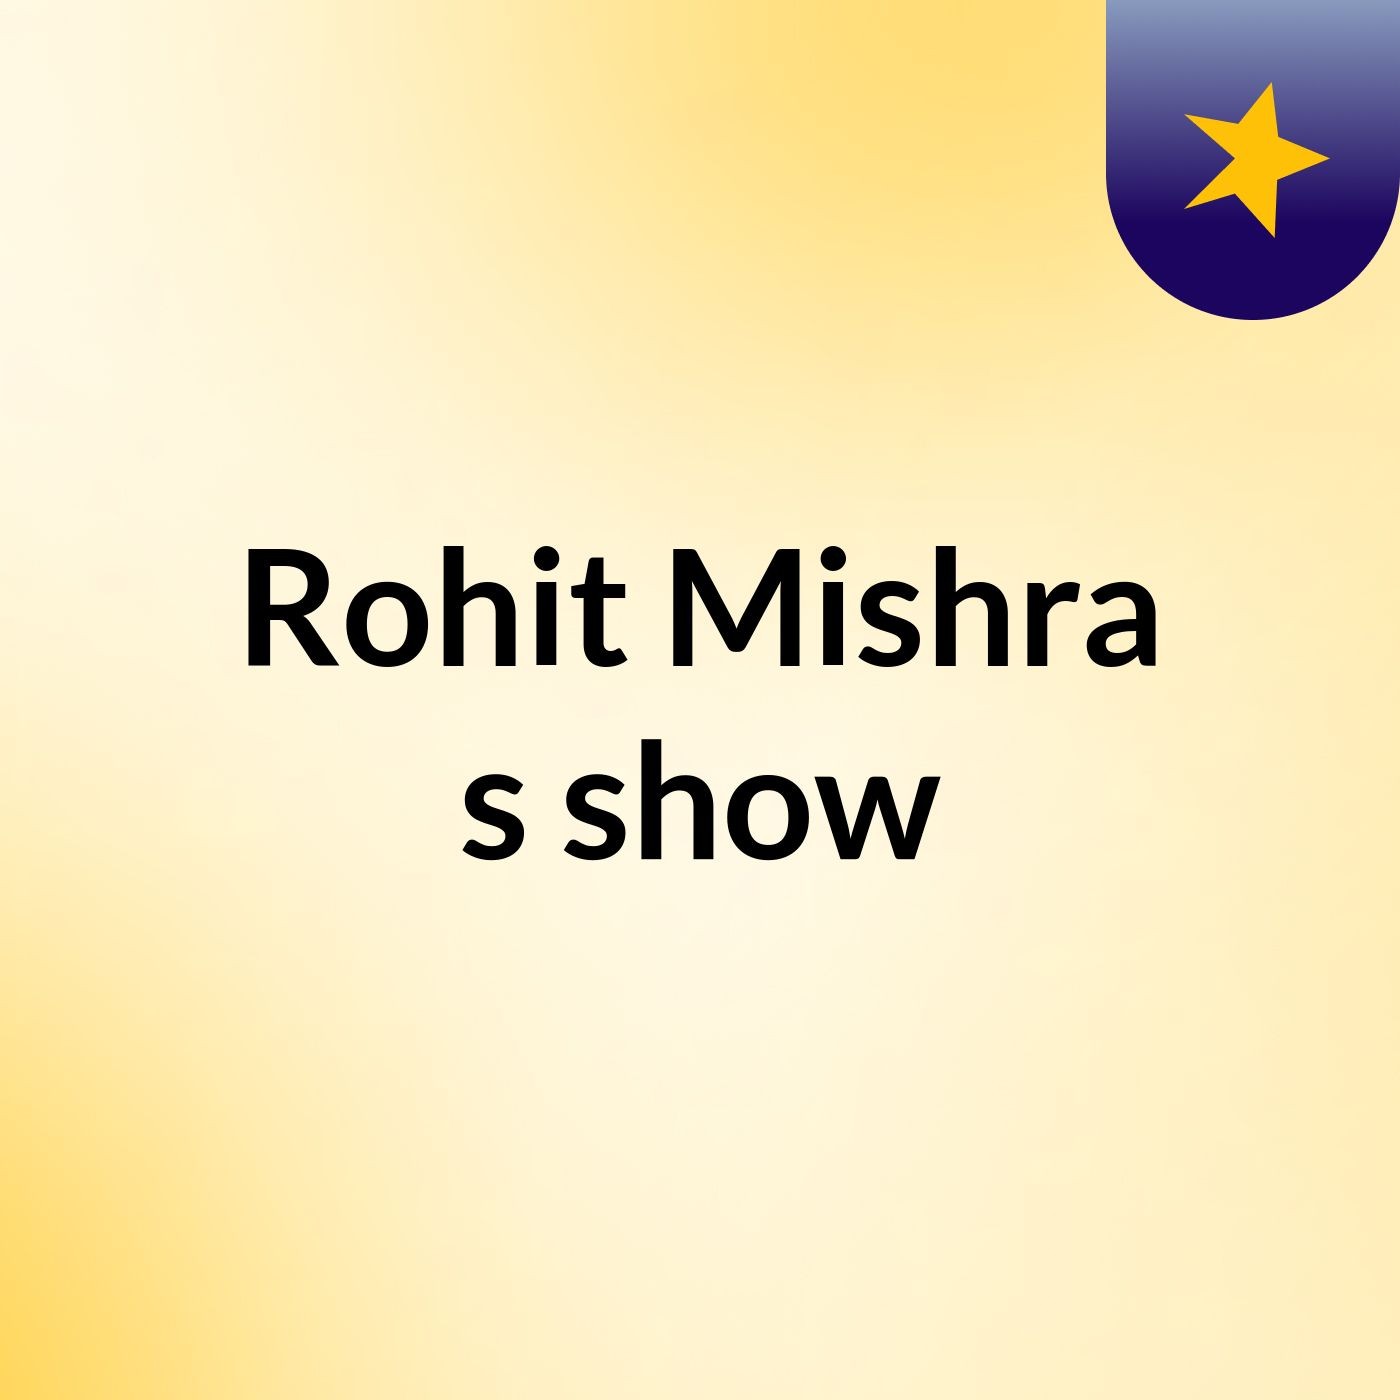 Rohit Mishra's show